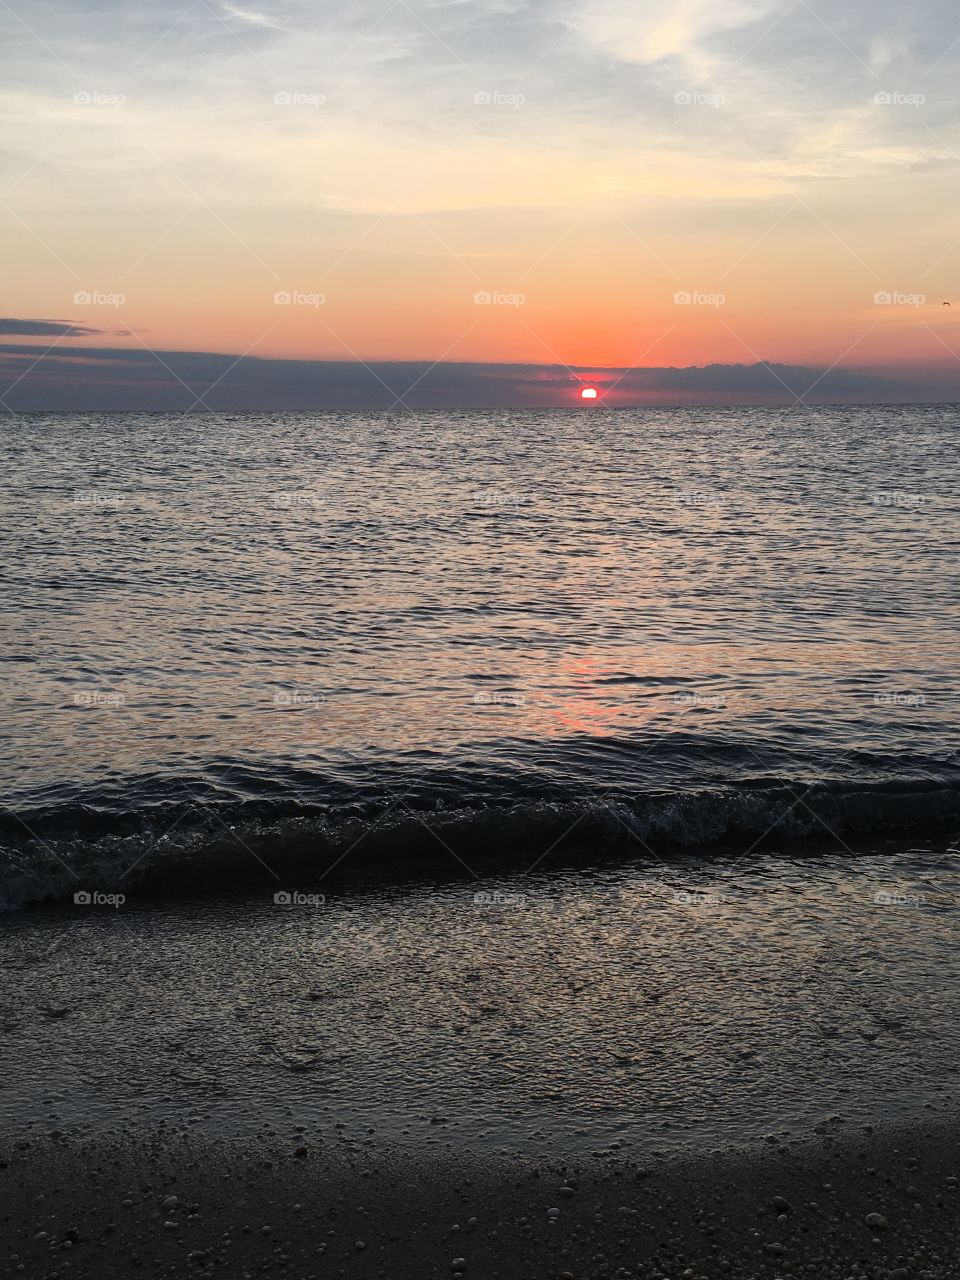 Cape May Sunset Beach 